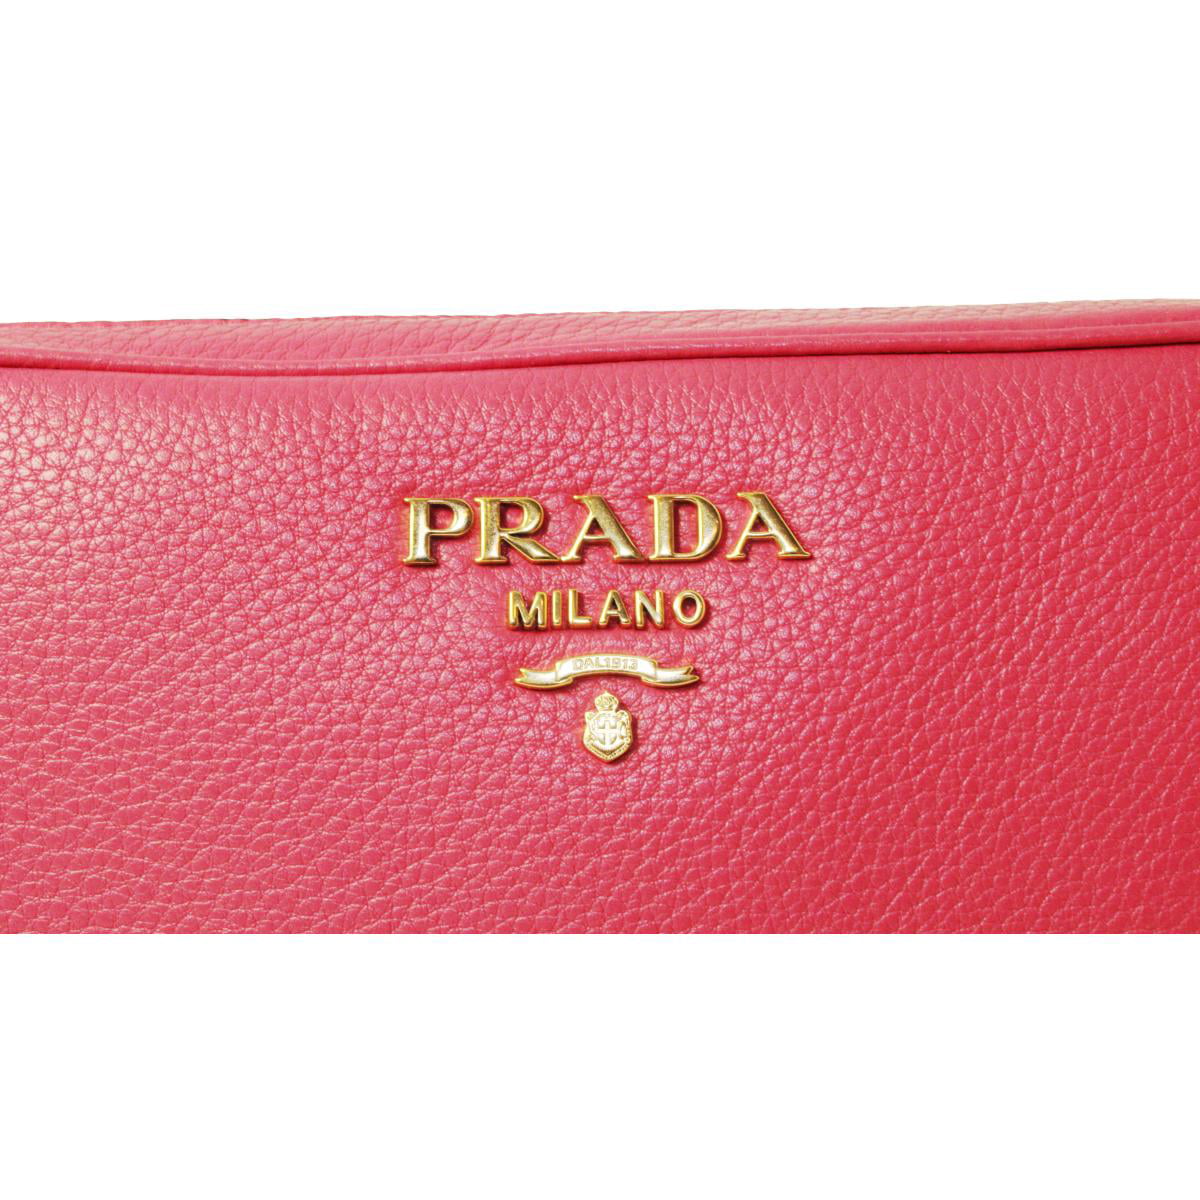  Prada Women's Black Bandoliera Vitello Phenix Leather Crossbody  Bag 1BH079